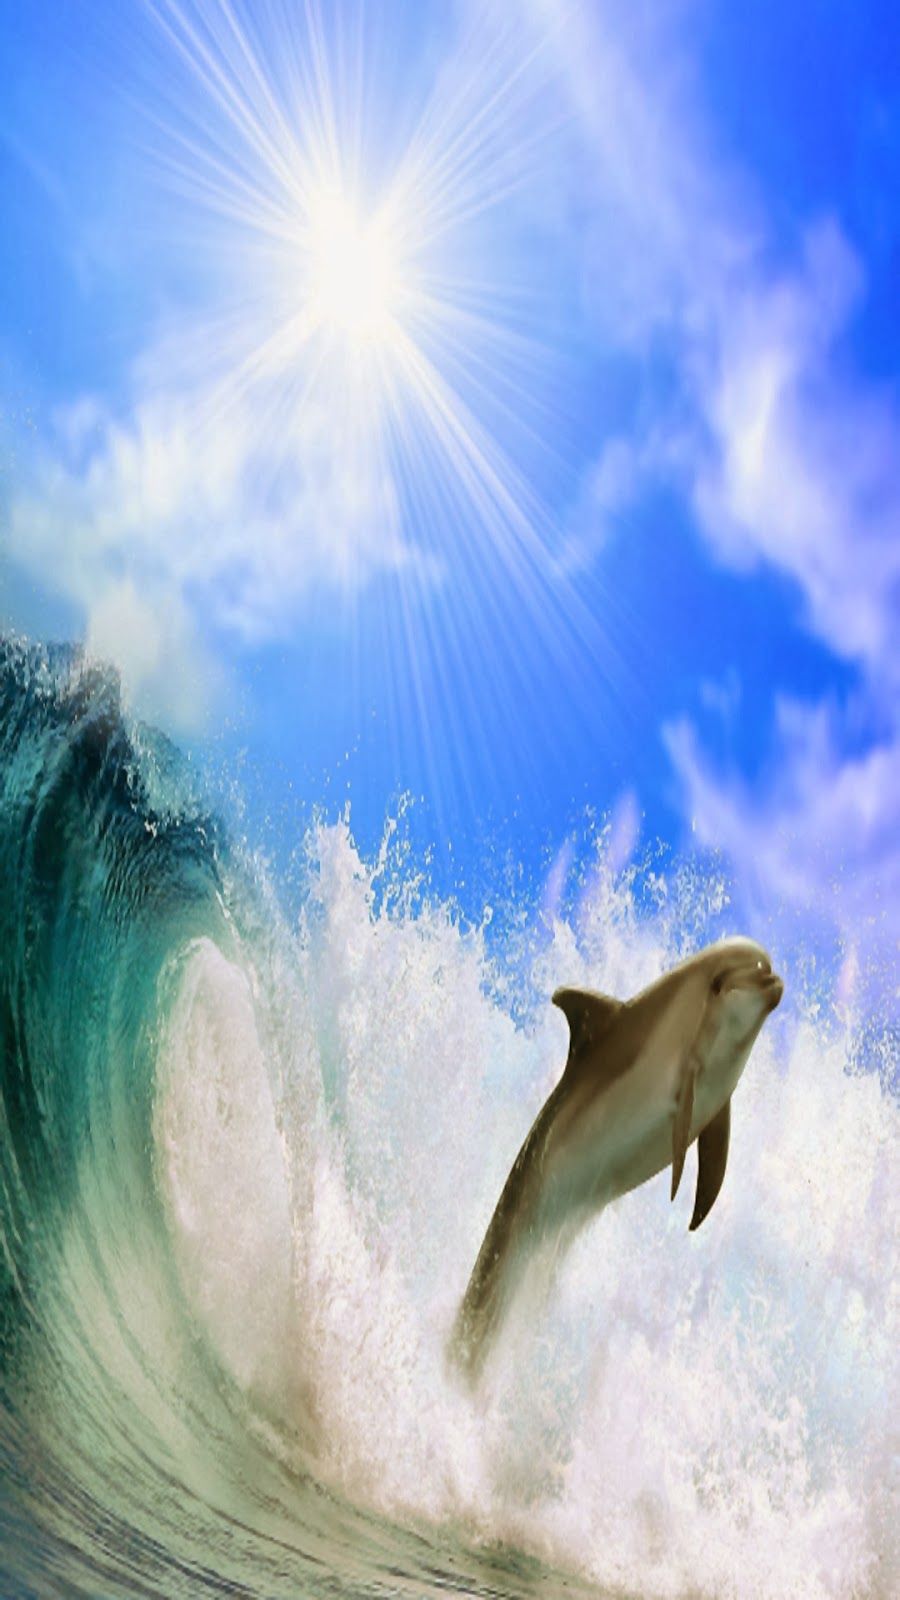 fond d'écran samsung s4,dauphin,grand dauphin,grand dauphin commun,mammifère marin,ciel